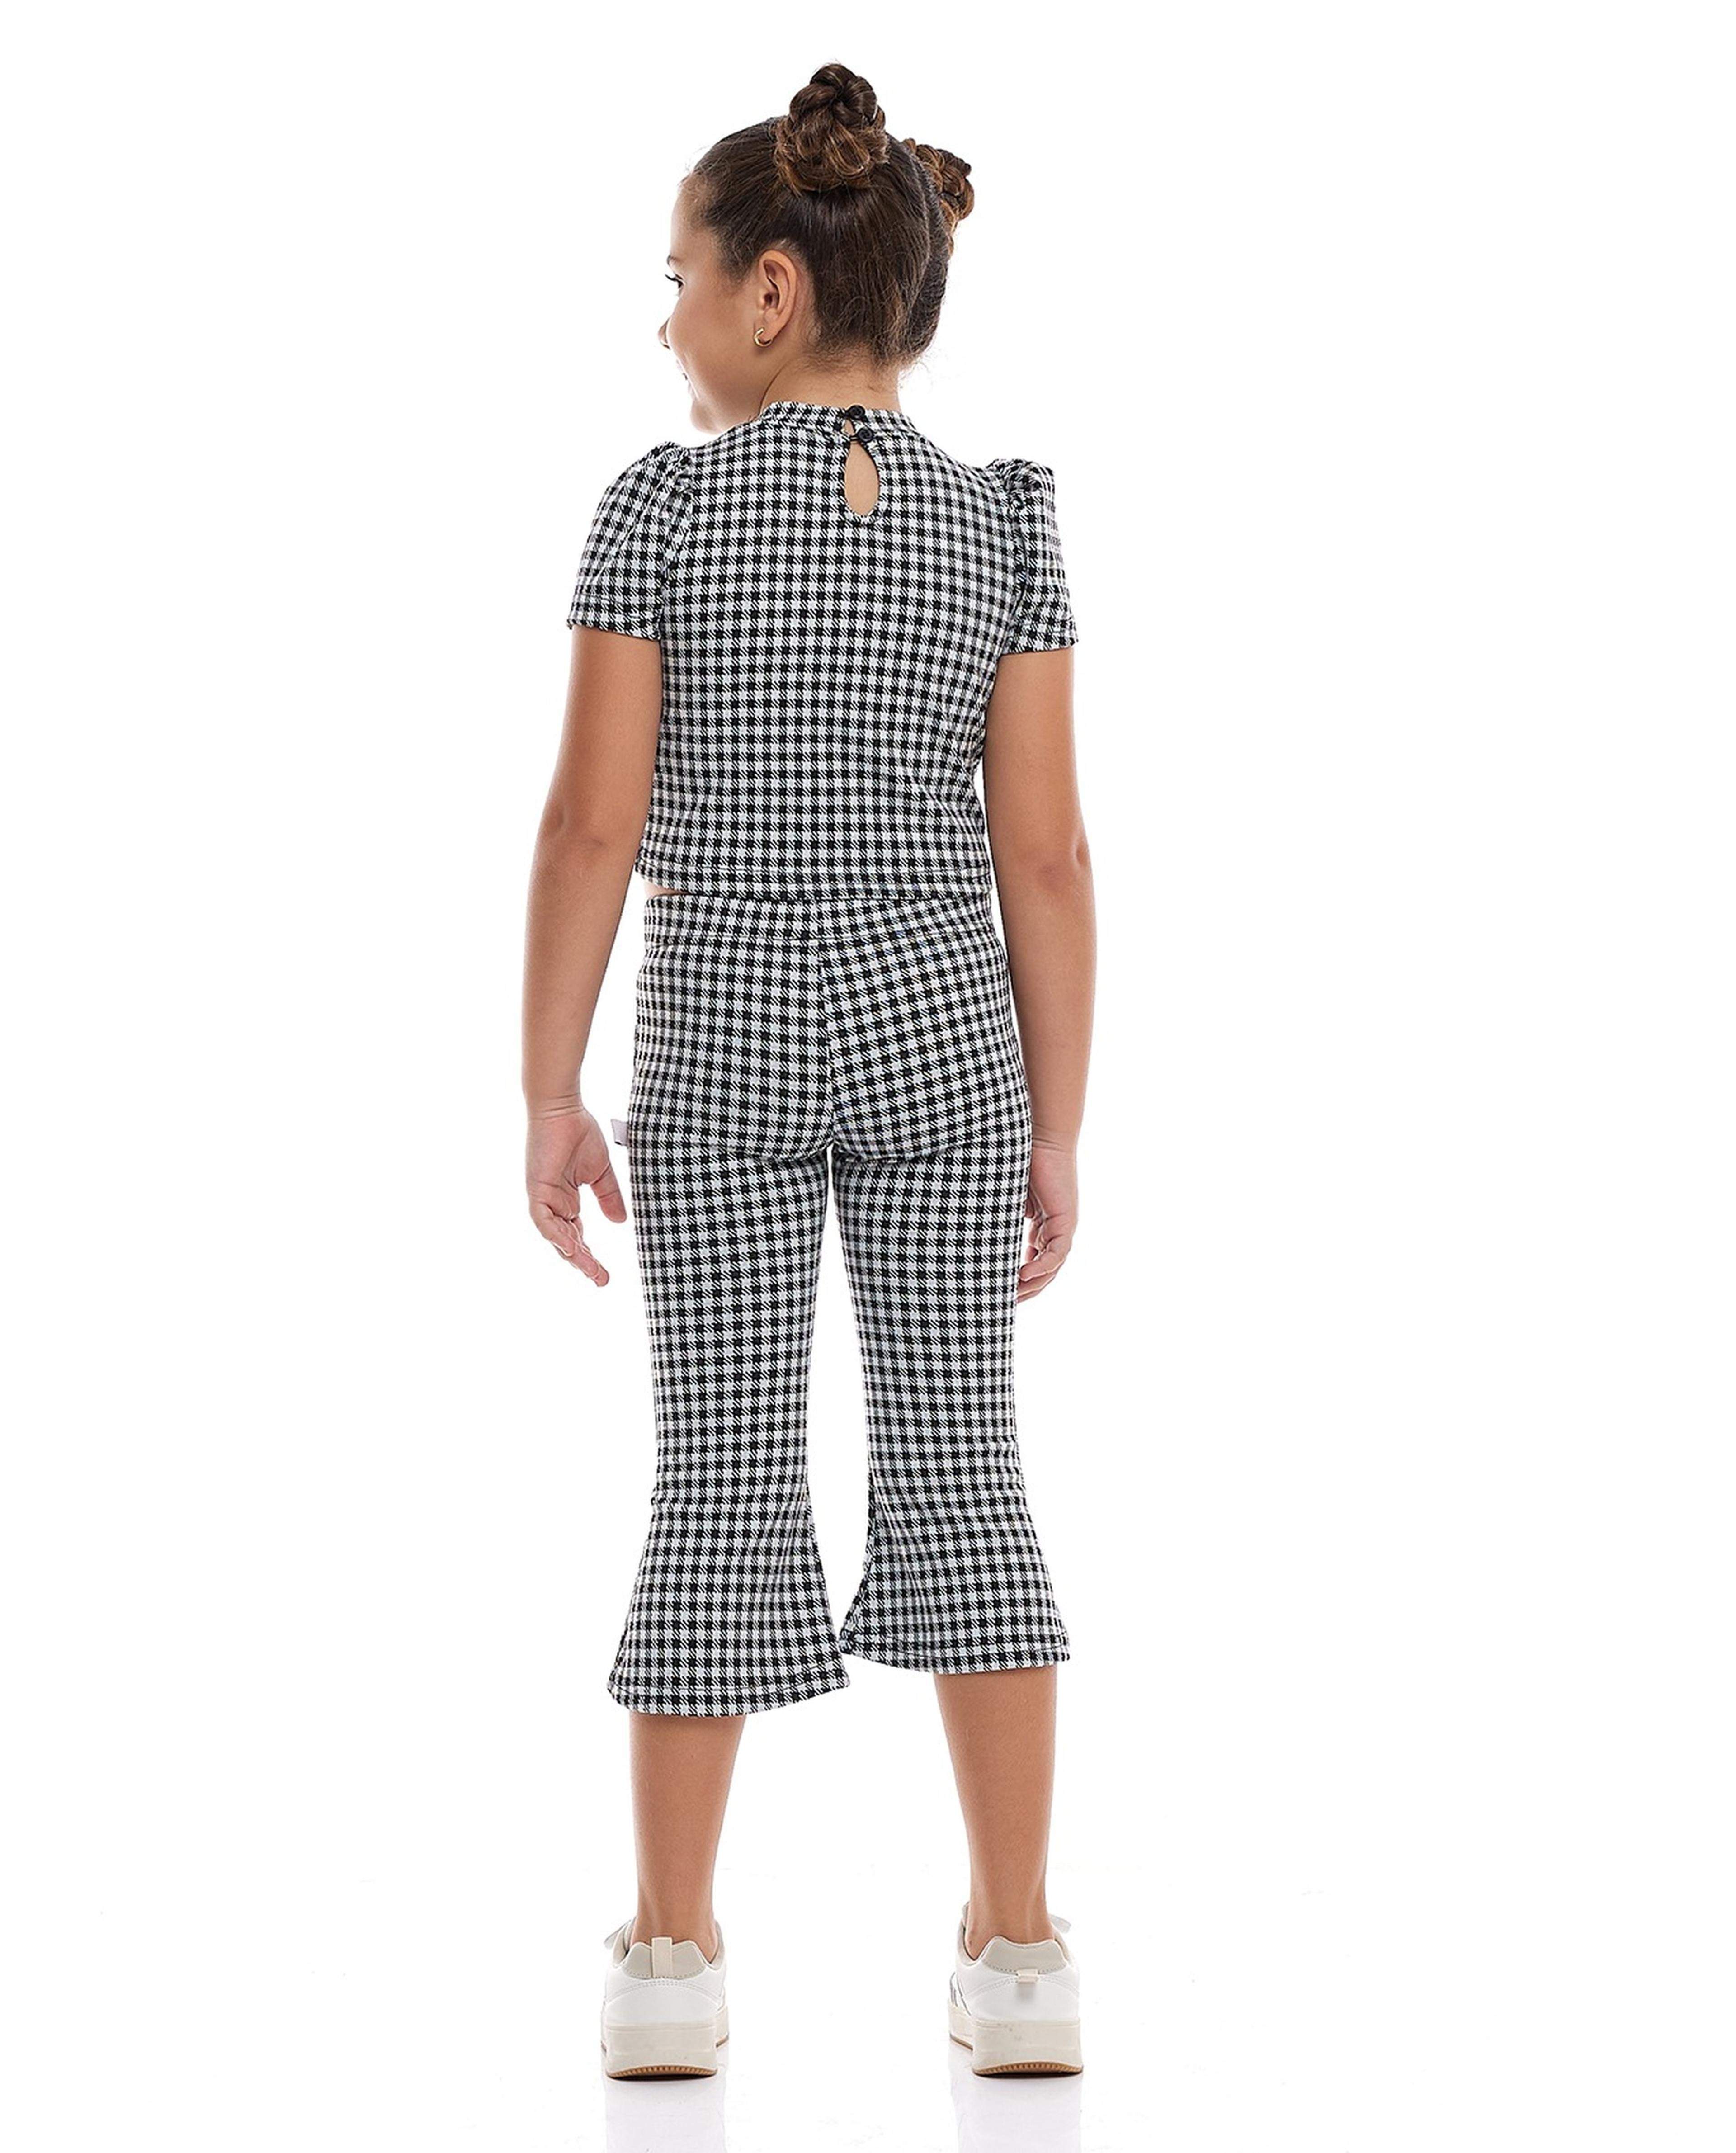 Checkered Clothing Set